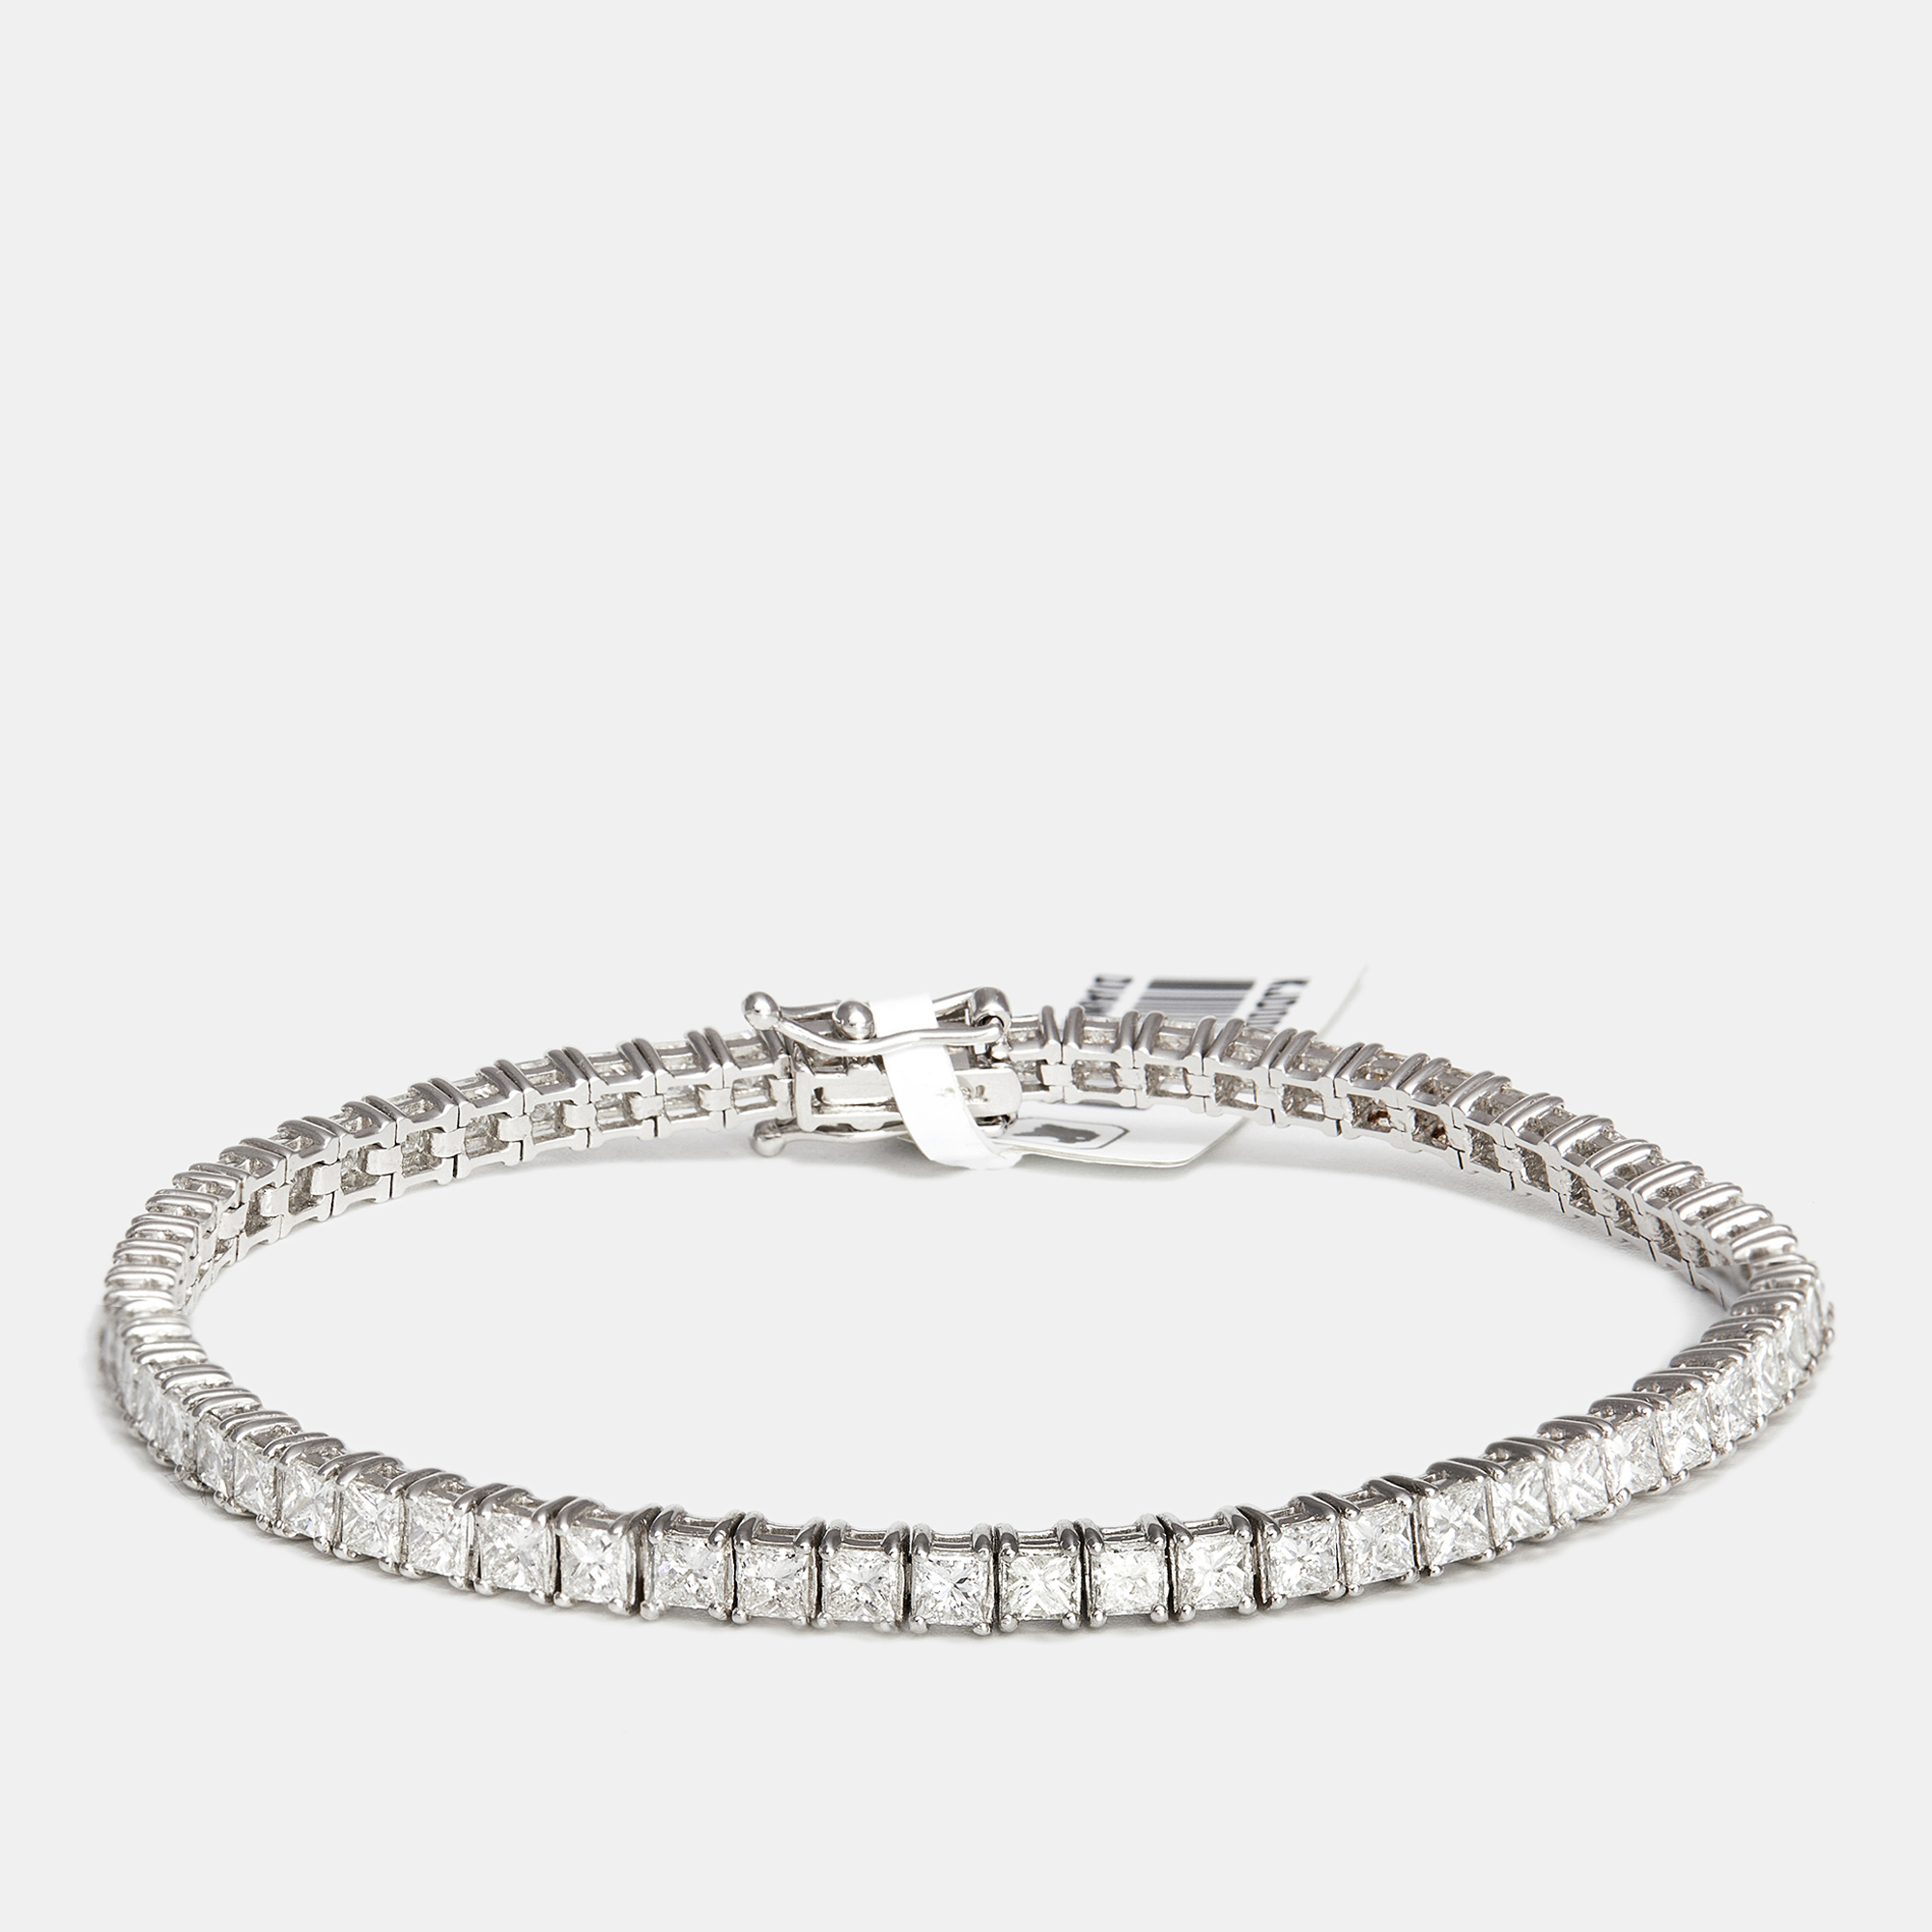 The diamond edit elegant princess cut diamond 6.00 ct 18k white gold tennis bracelet